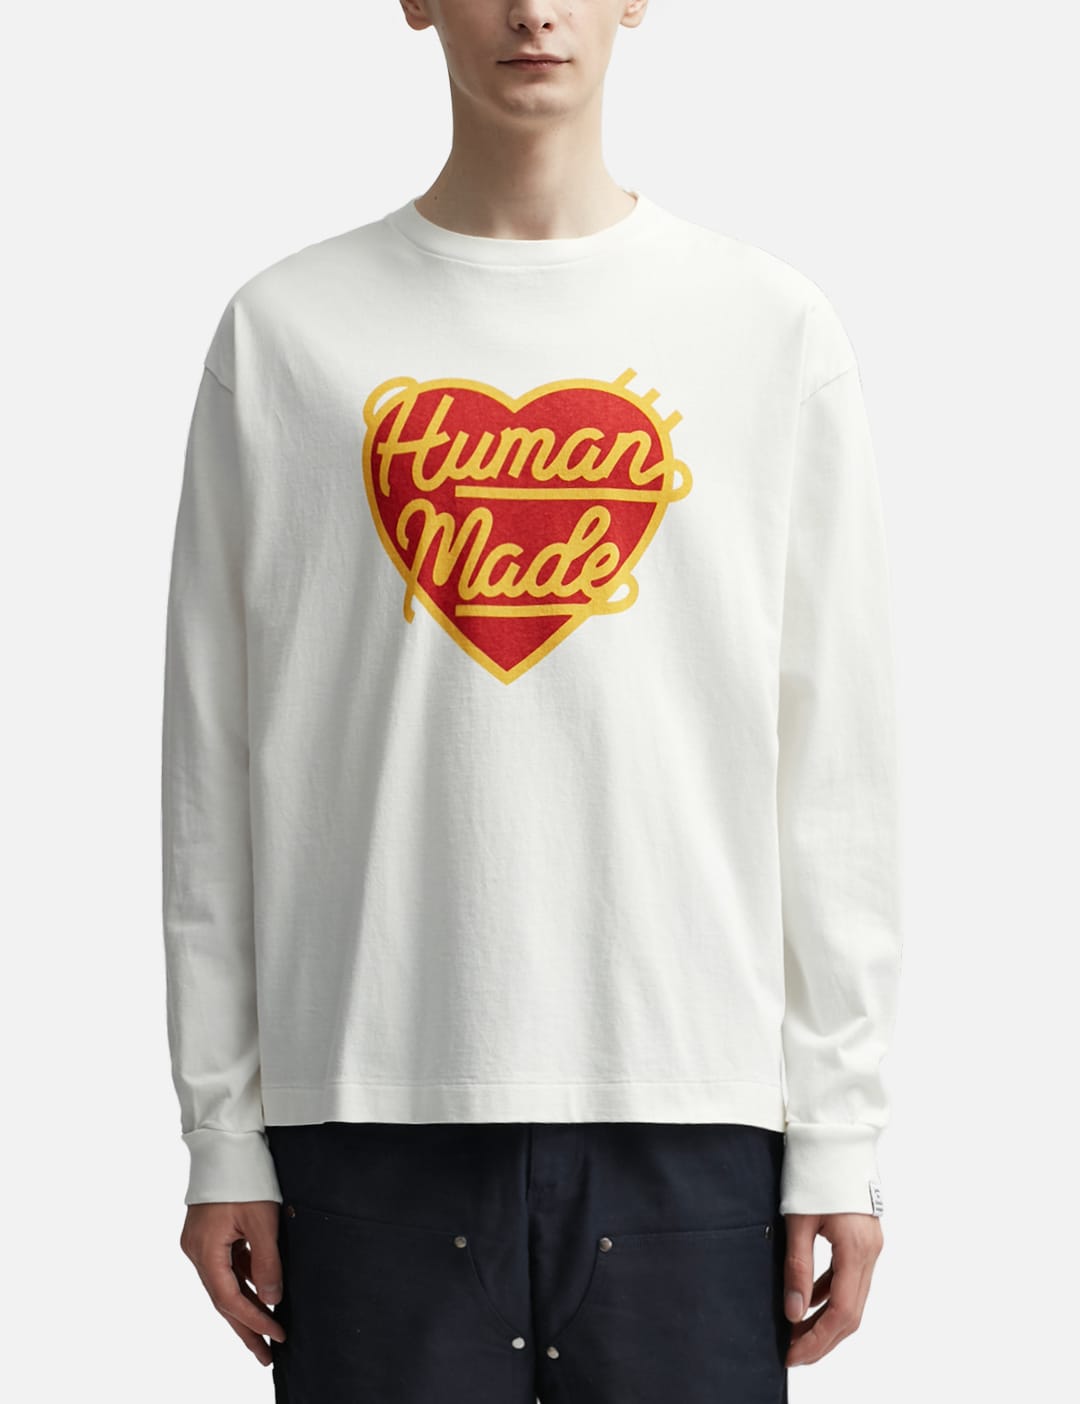 Human Made - Graphic Long Sleeve T-shirt #4 | HBX - Globally